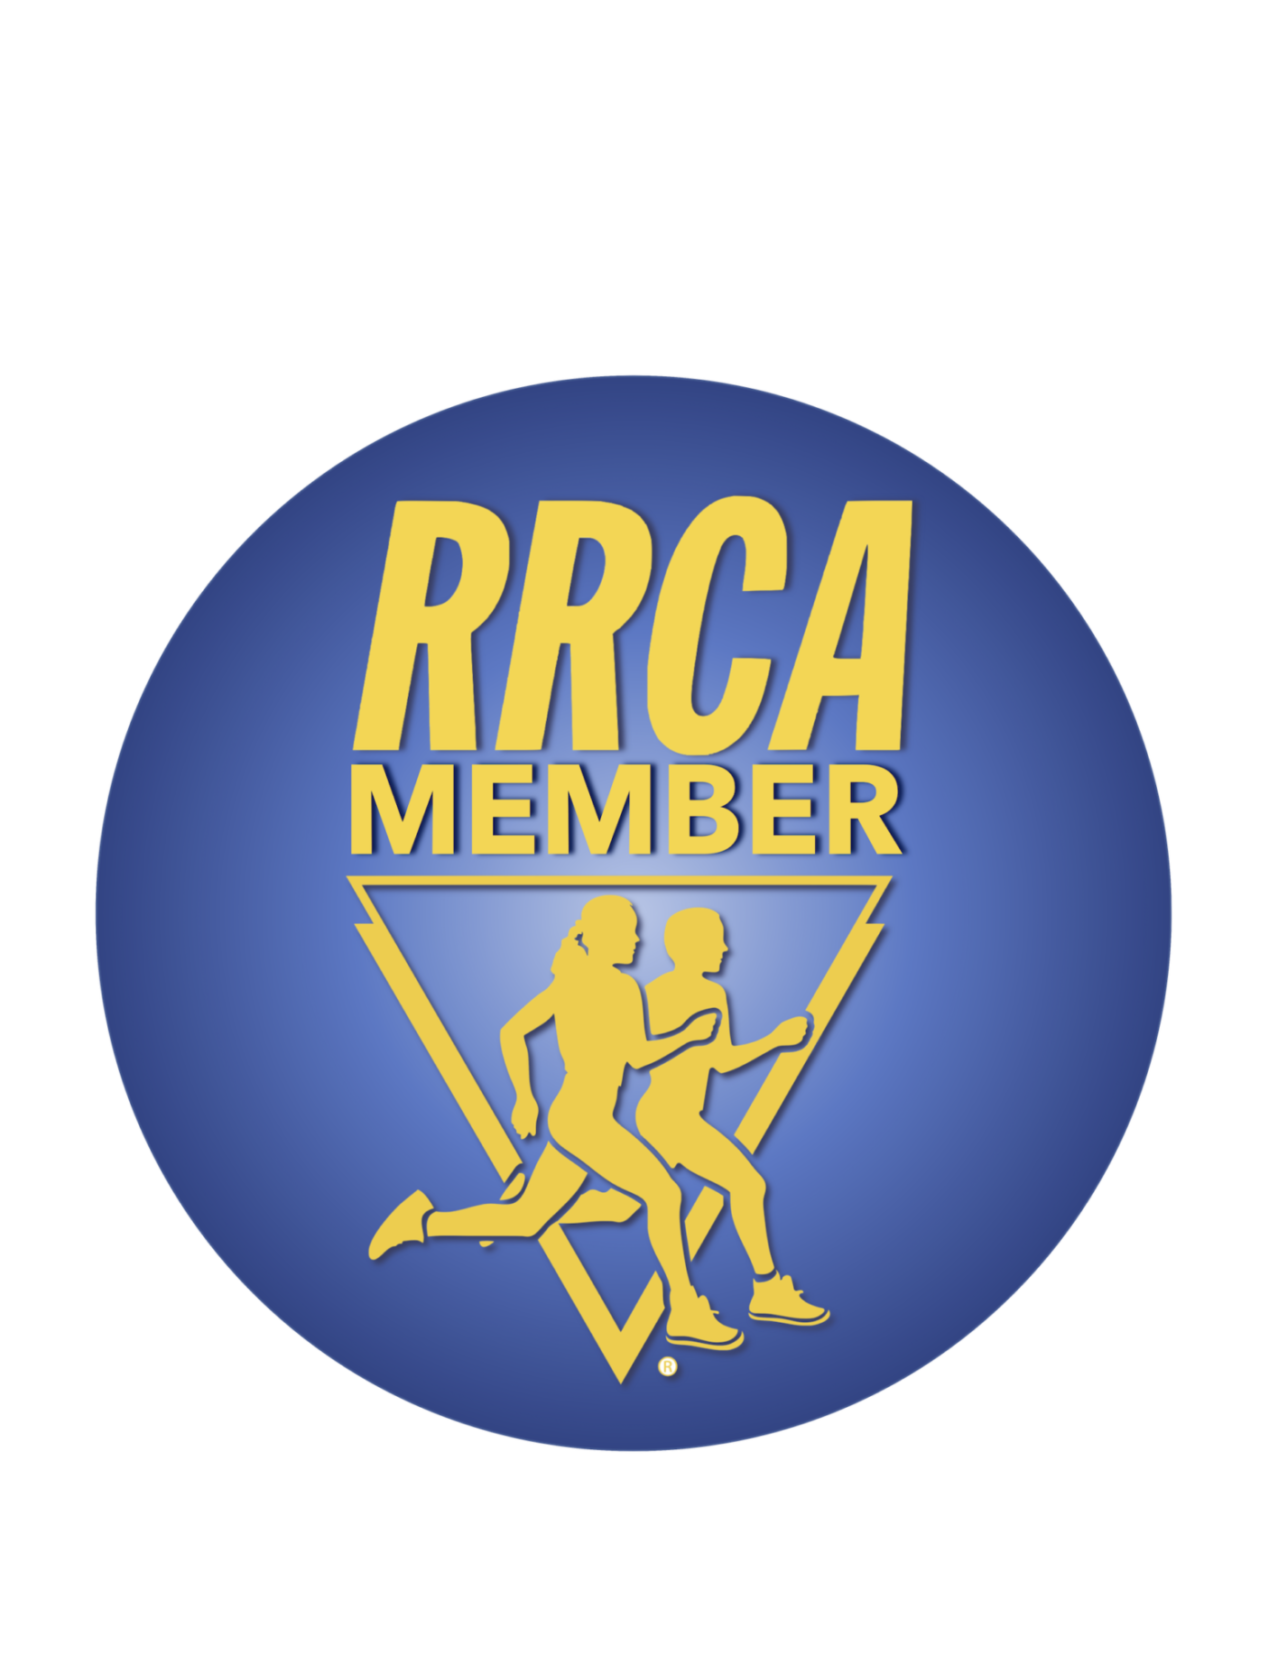 RRCA.2020.Member-Icon.v2.circle (1)